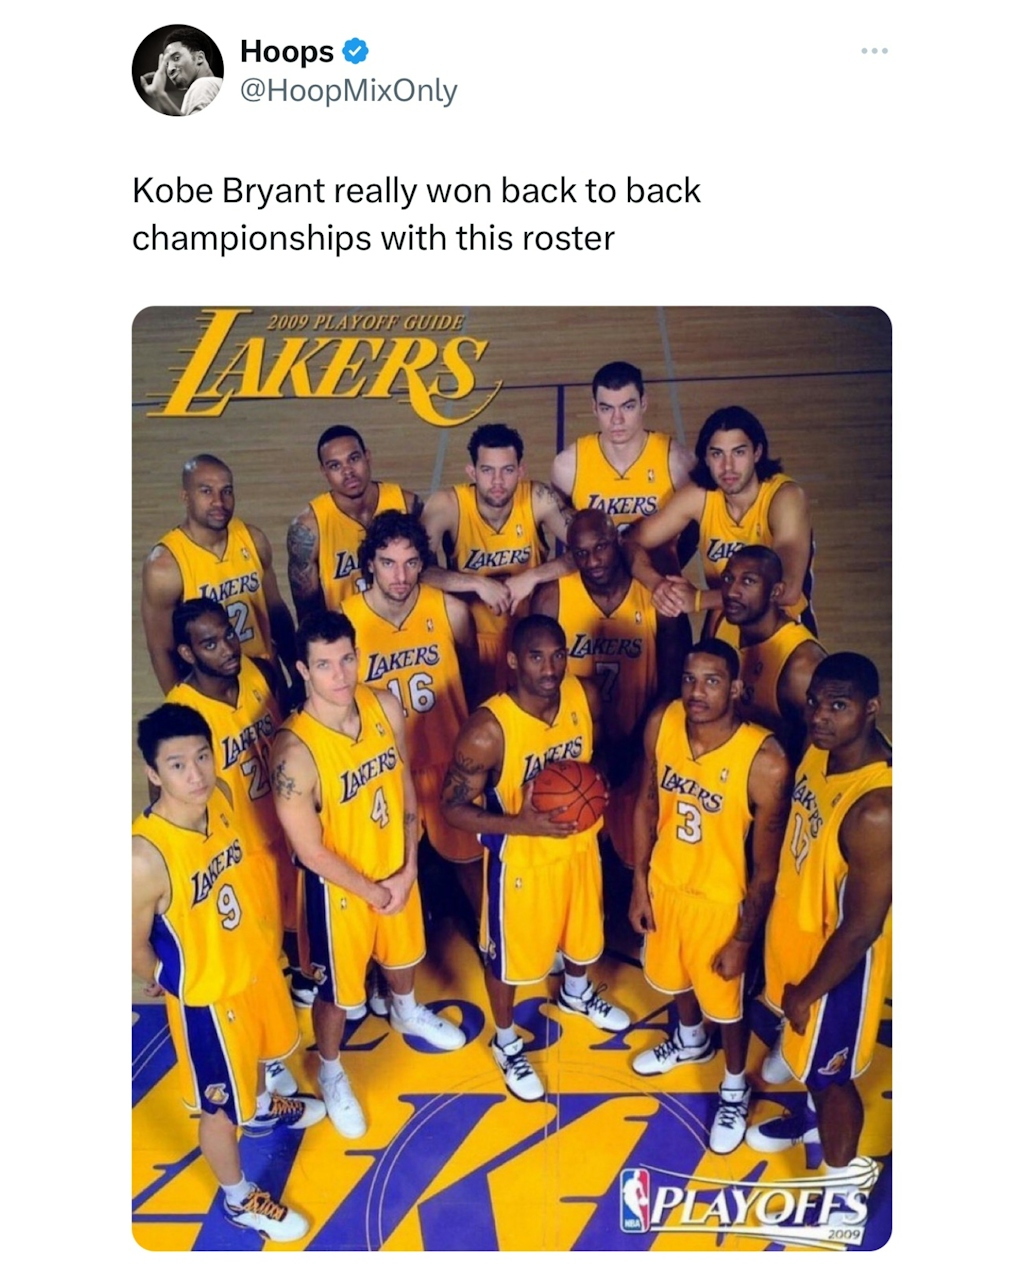 Kobe made no excuses 💪🏽